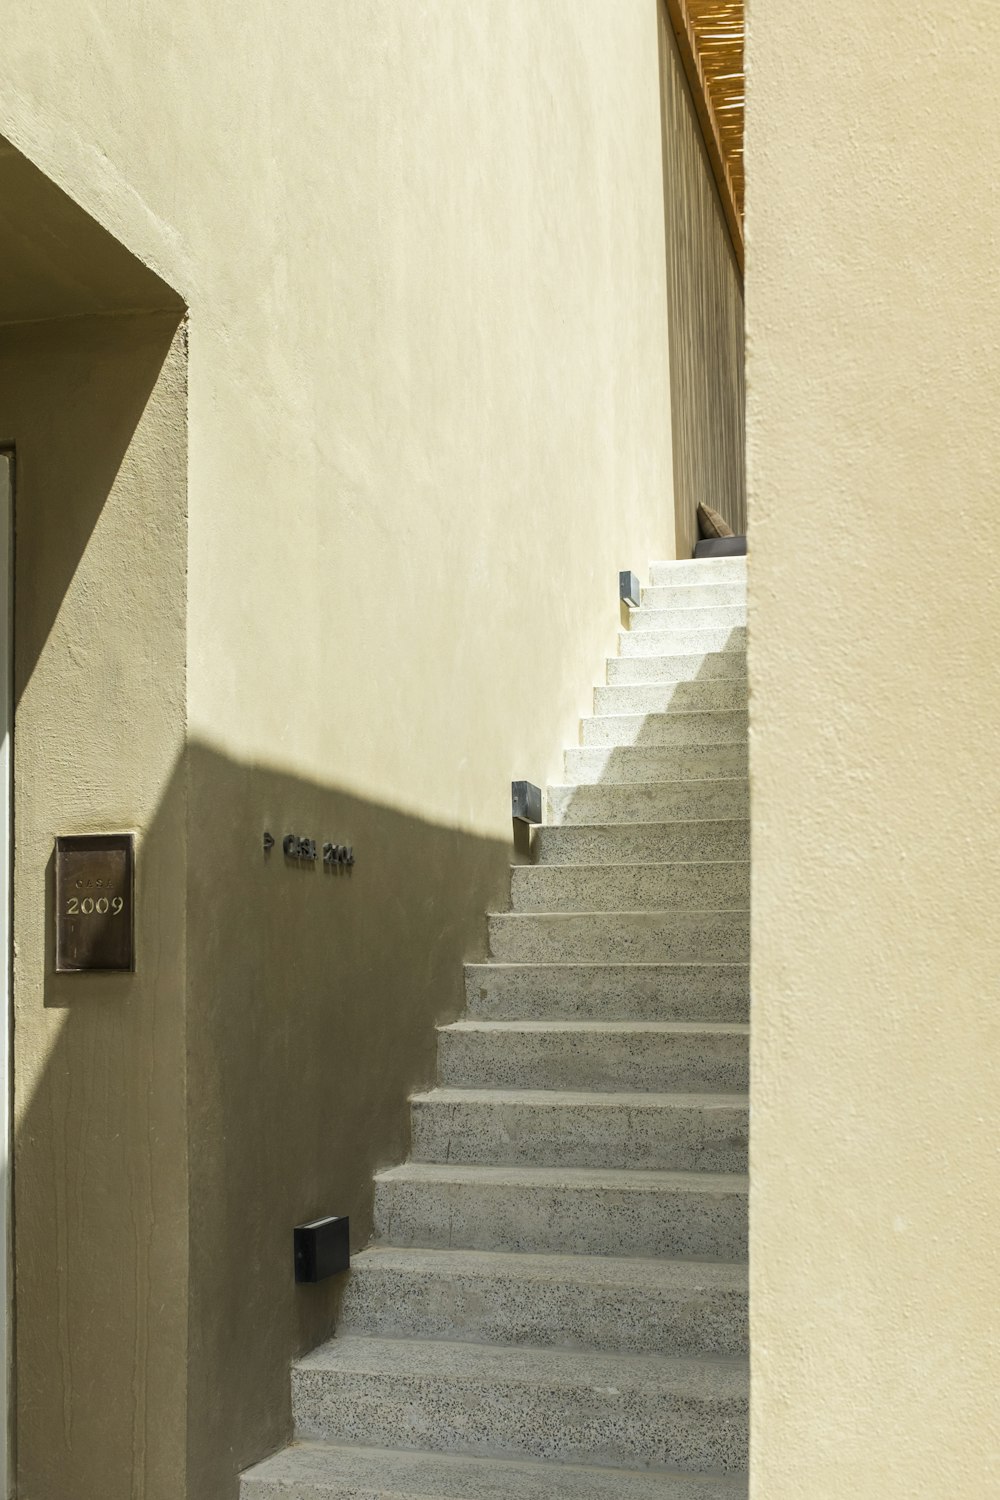 Escalier en béton blanc avec porte en bois brun